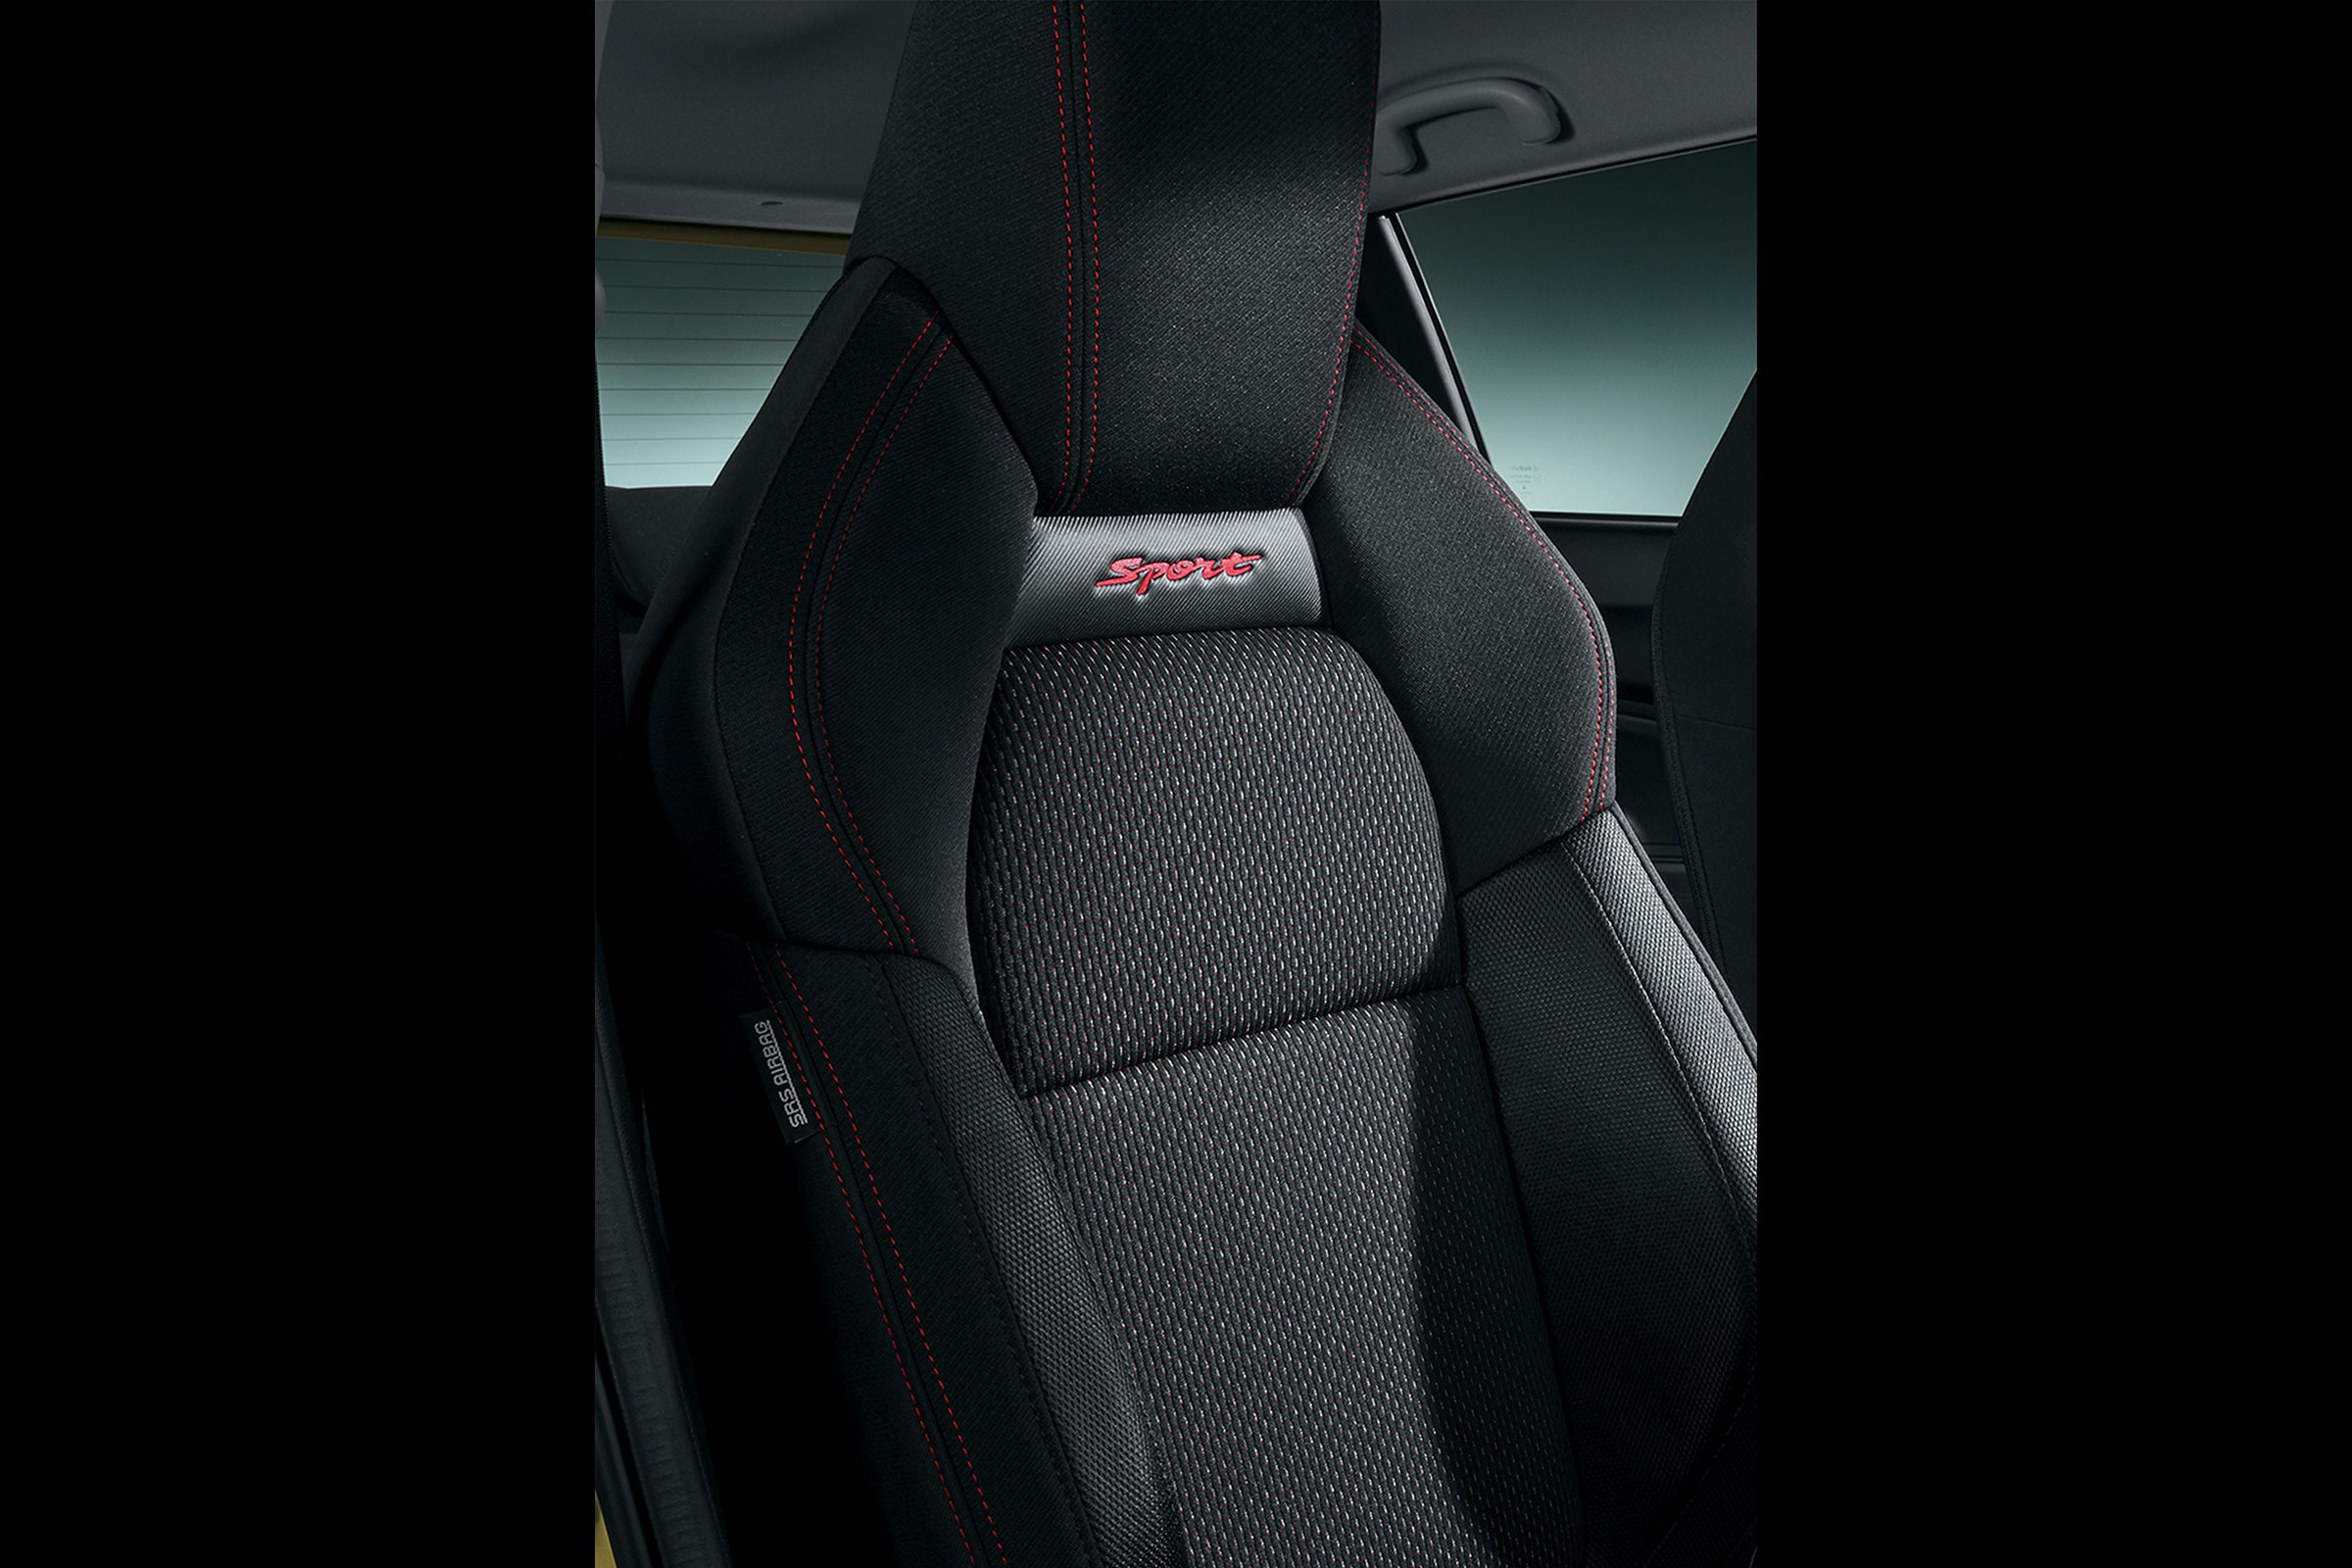 2018 Suzuki Swift Sport interior confirms manual, 1.0T